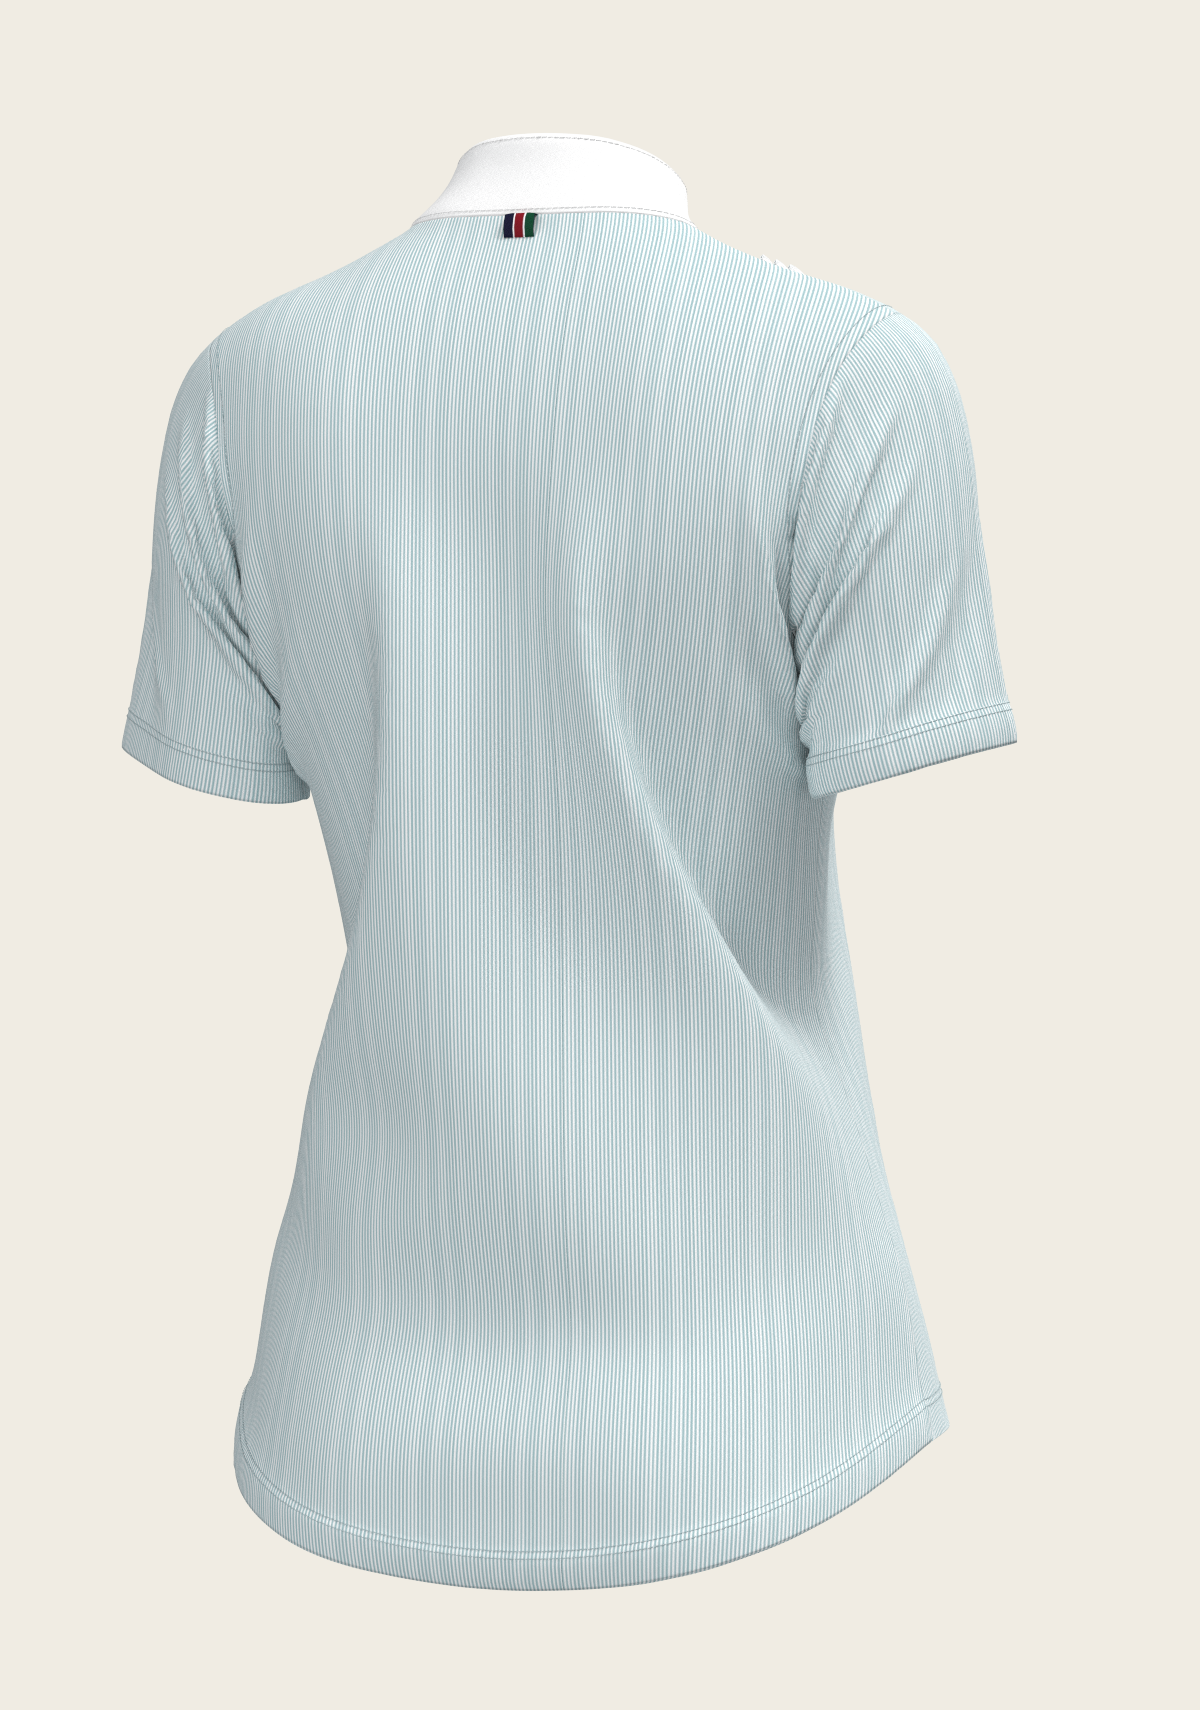  Stripes in Sky Blue Short Pleated Short Sleeve Show Shirt